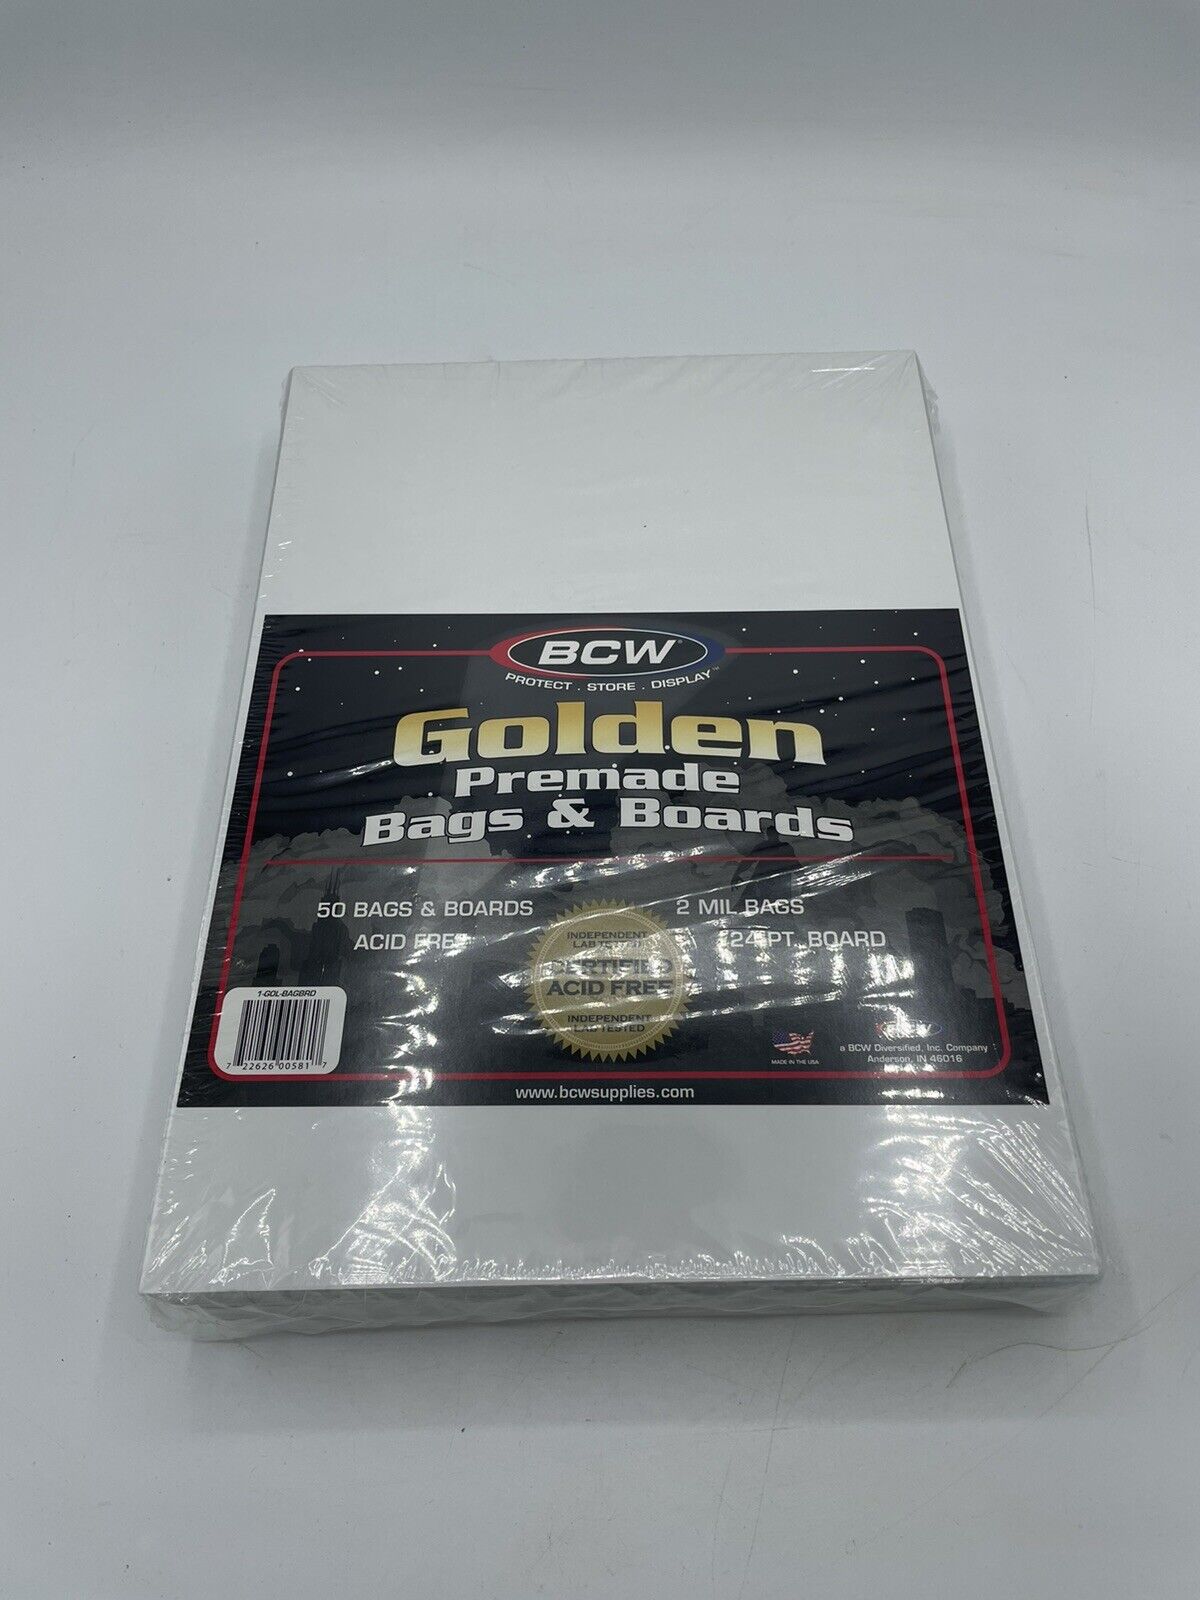 BCW Golden Premade Bags&Boards 1 Sealed Pack QTY50 Acid Free 2Mil Bag 24pt Board